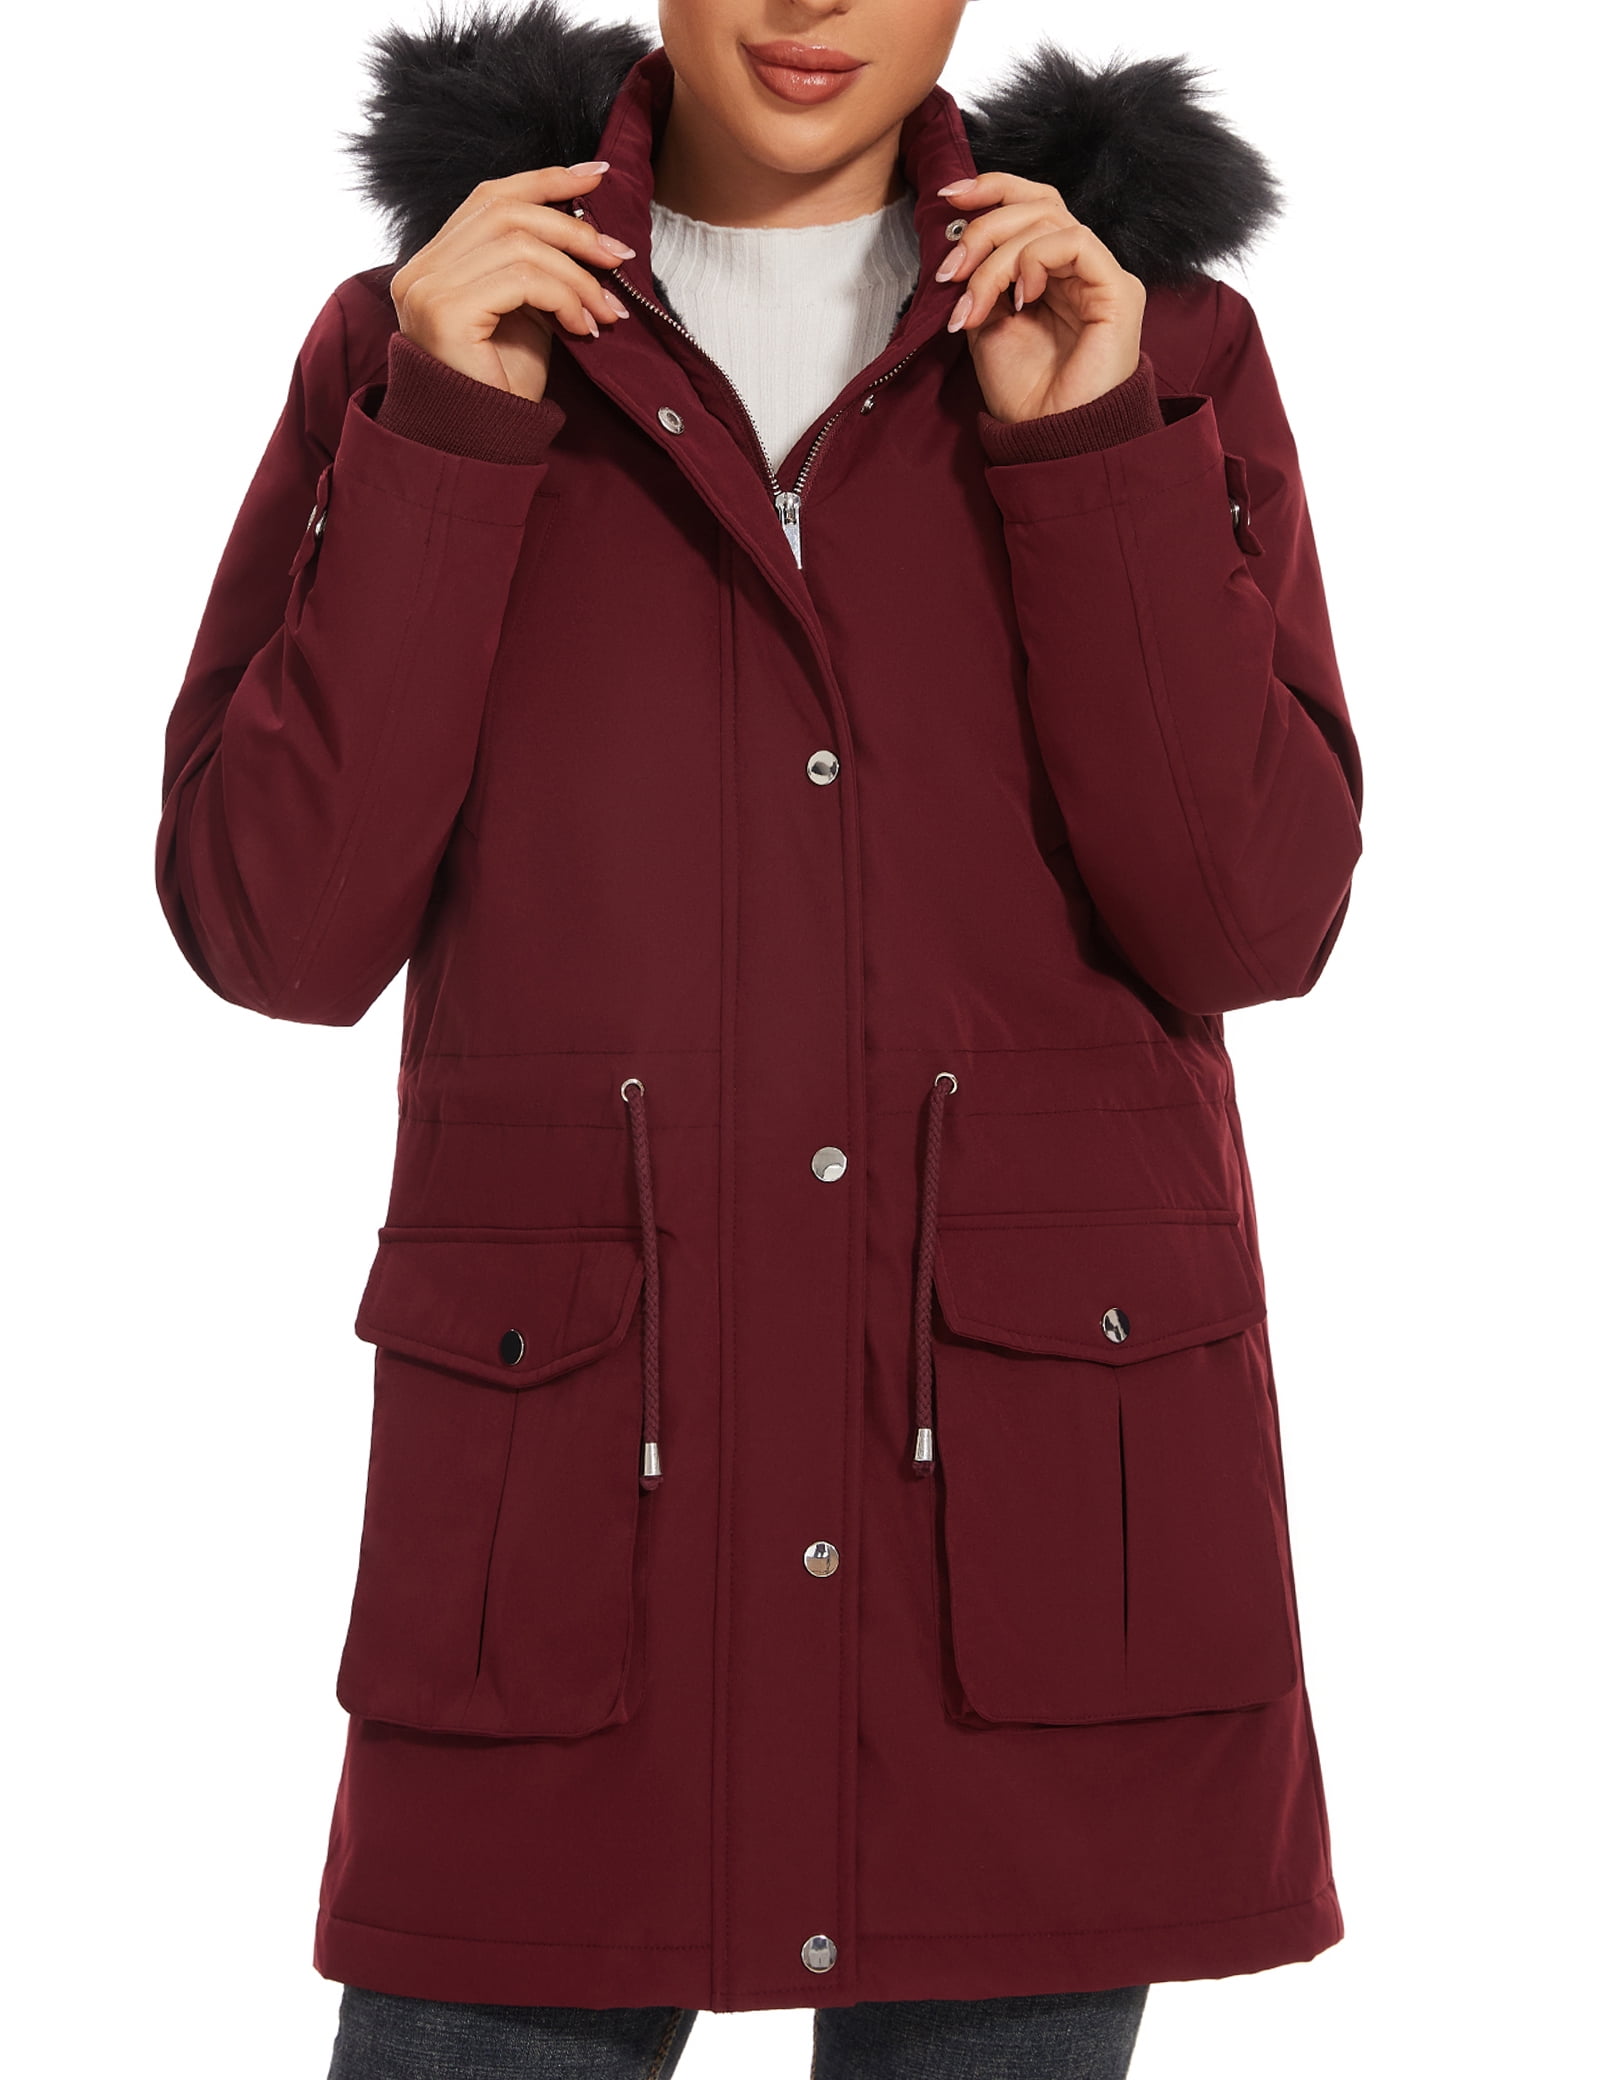 Women's Parka Coat Hooded Warm Parka Jacket Long Winter Coat with